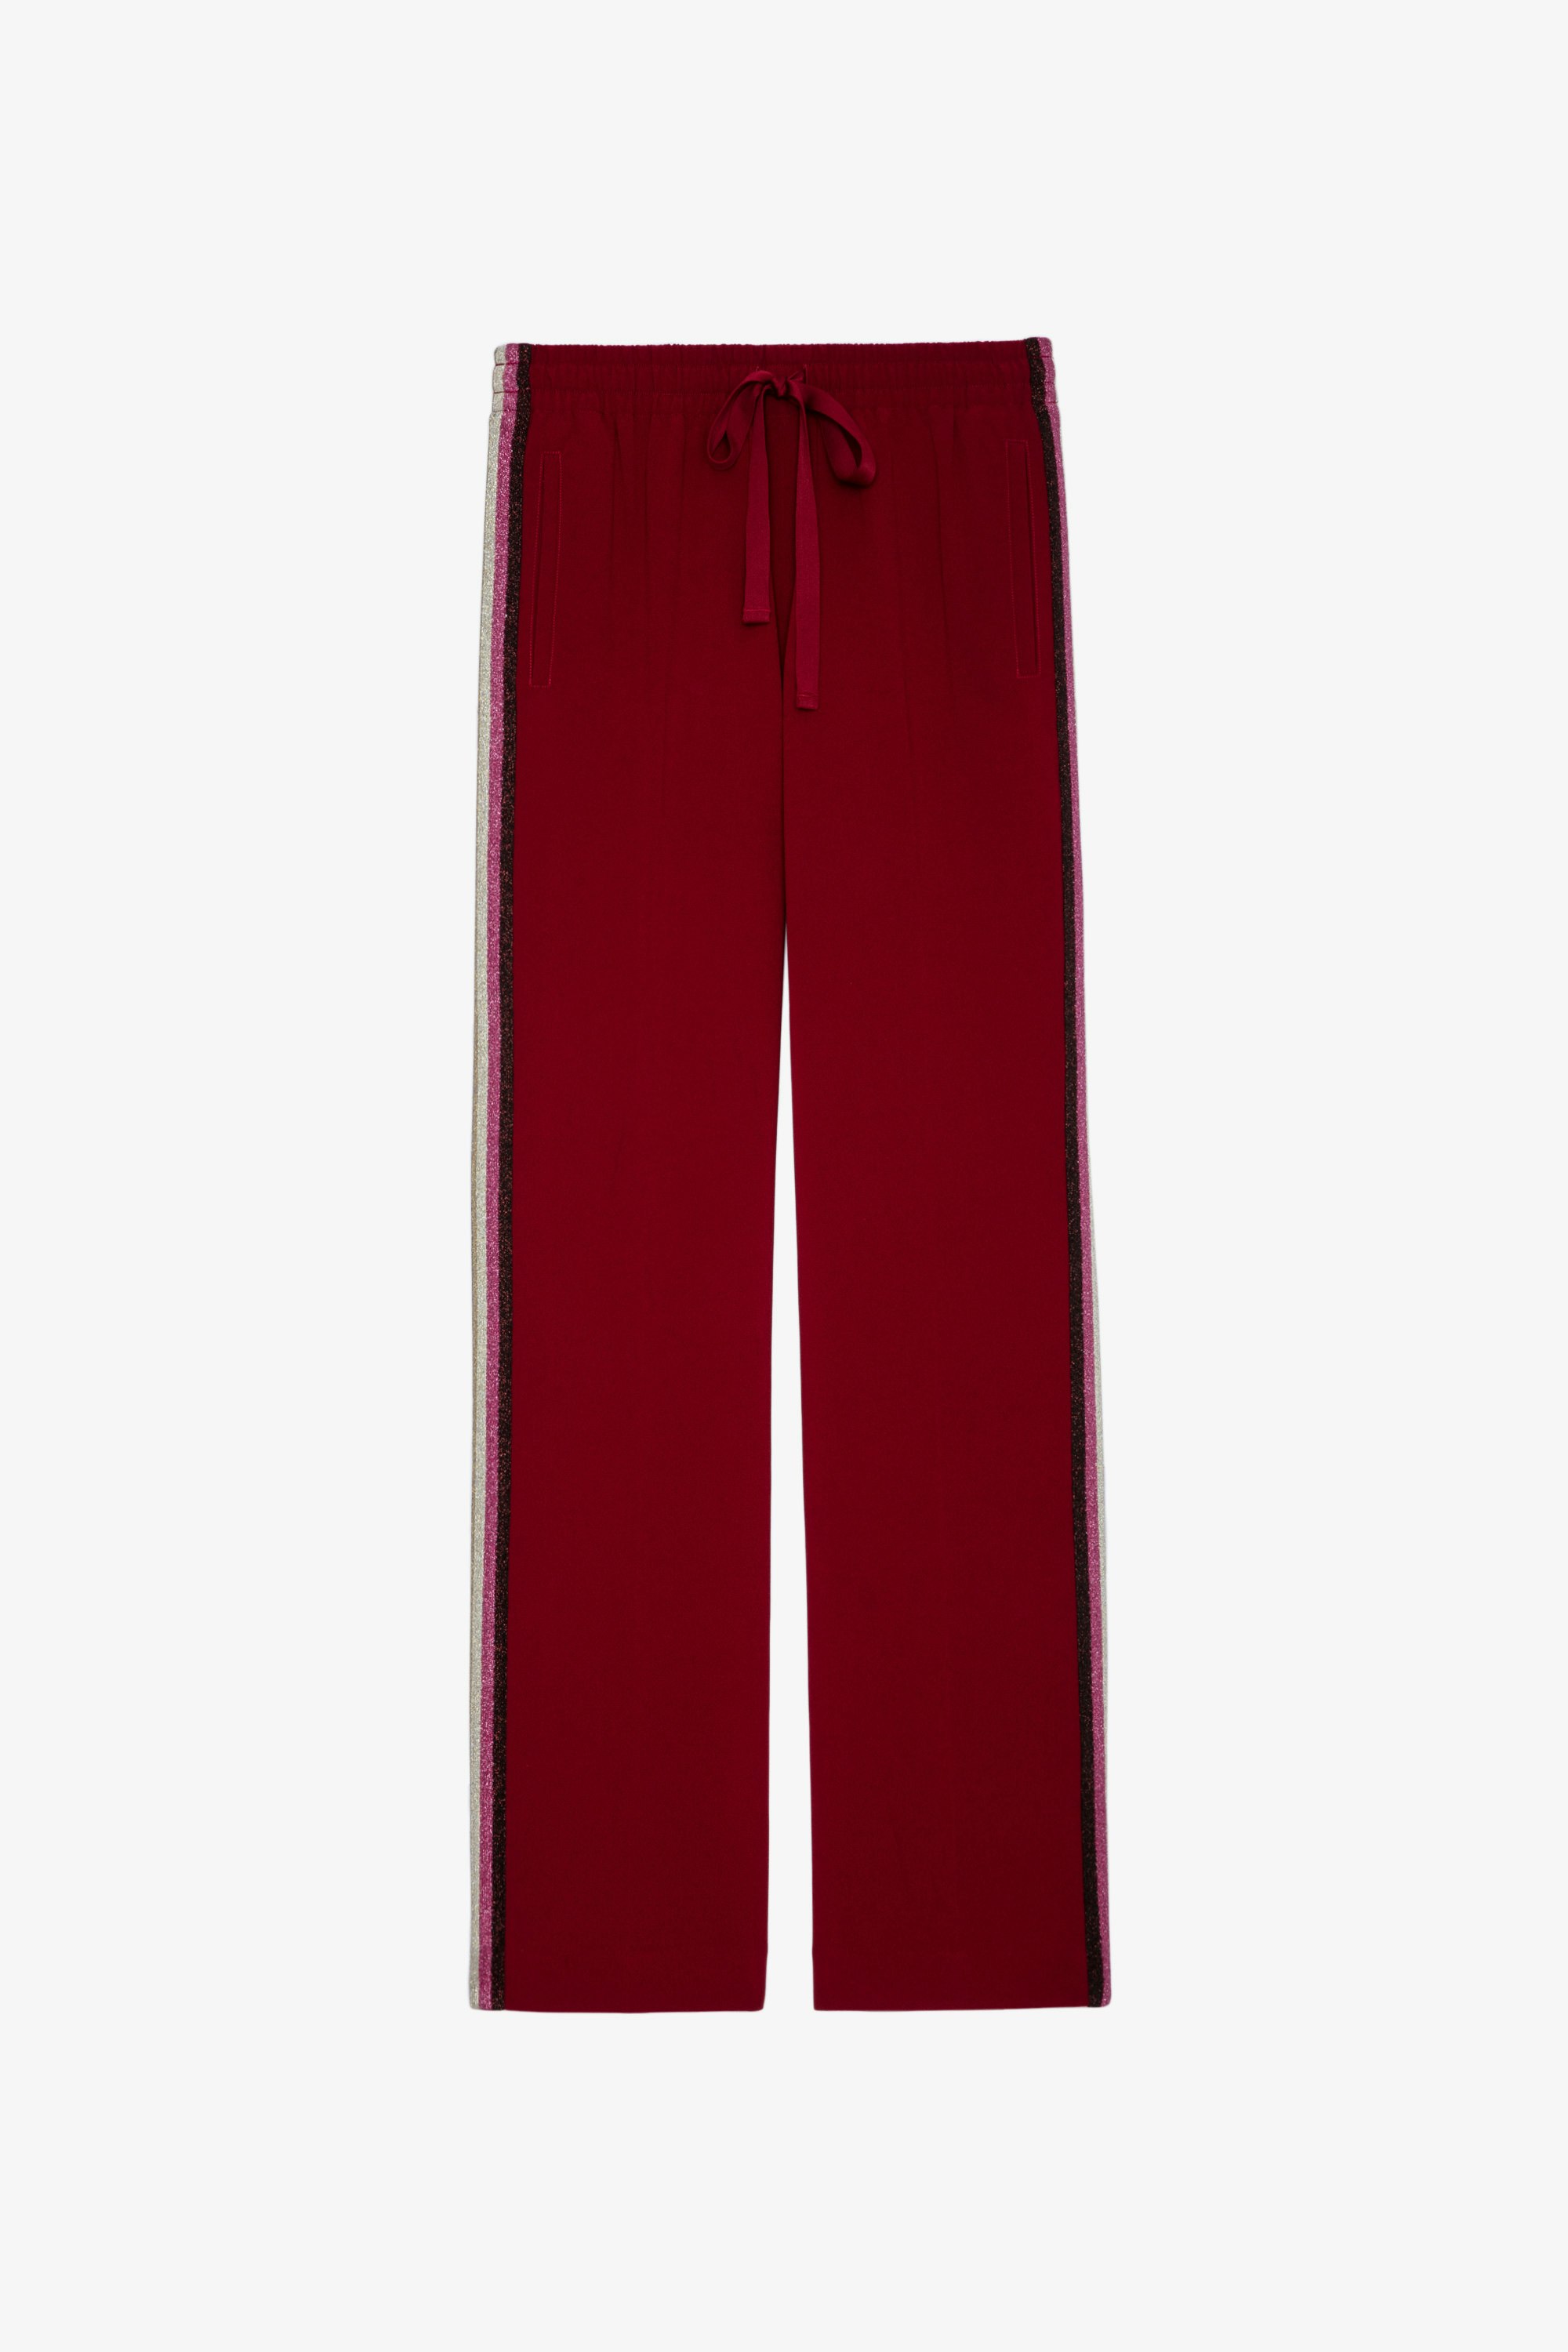 Pantaloni Pomy Pantaloni con bande laterali colorate glitterate donna